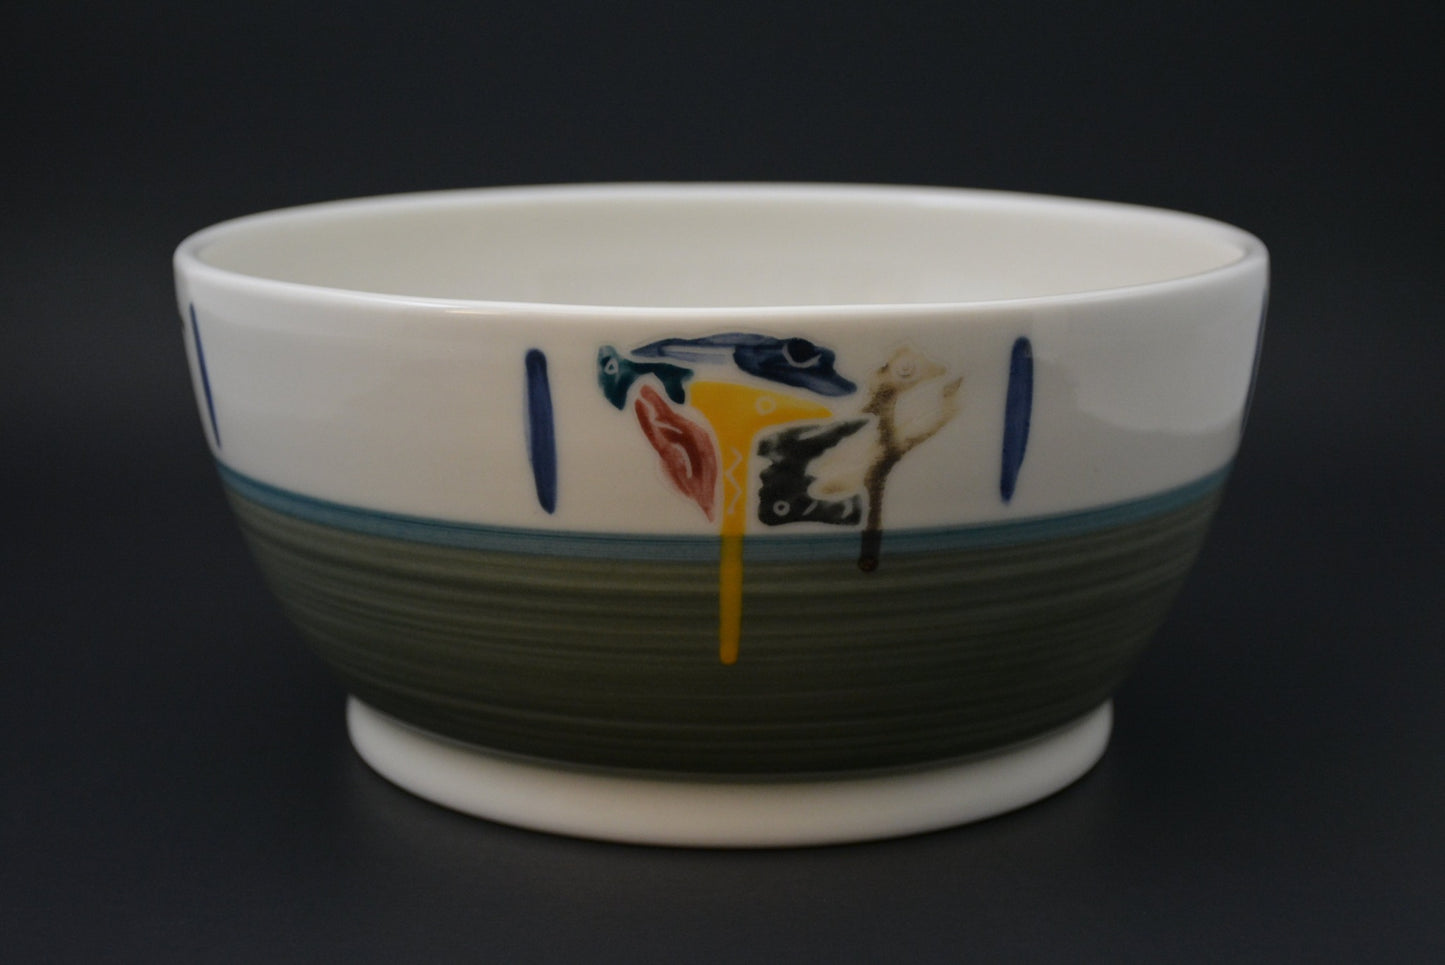 BL-20 Ceramic Green Bowl - Green porcelain bowl